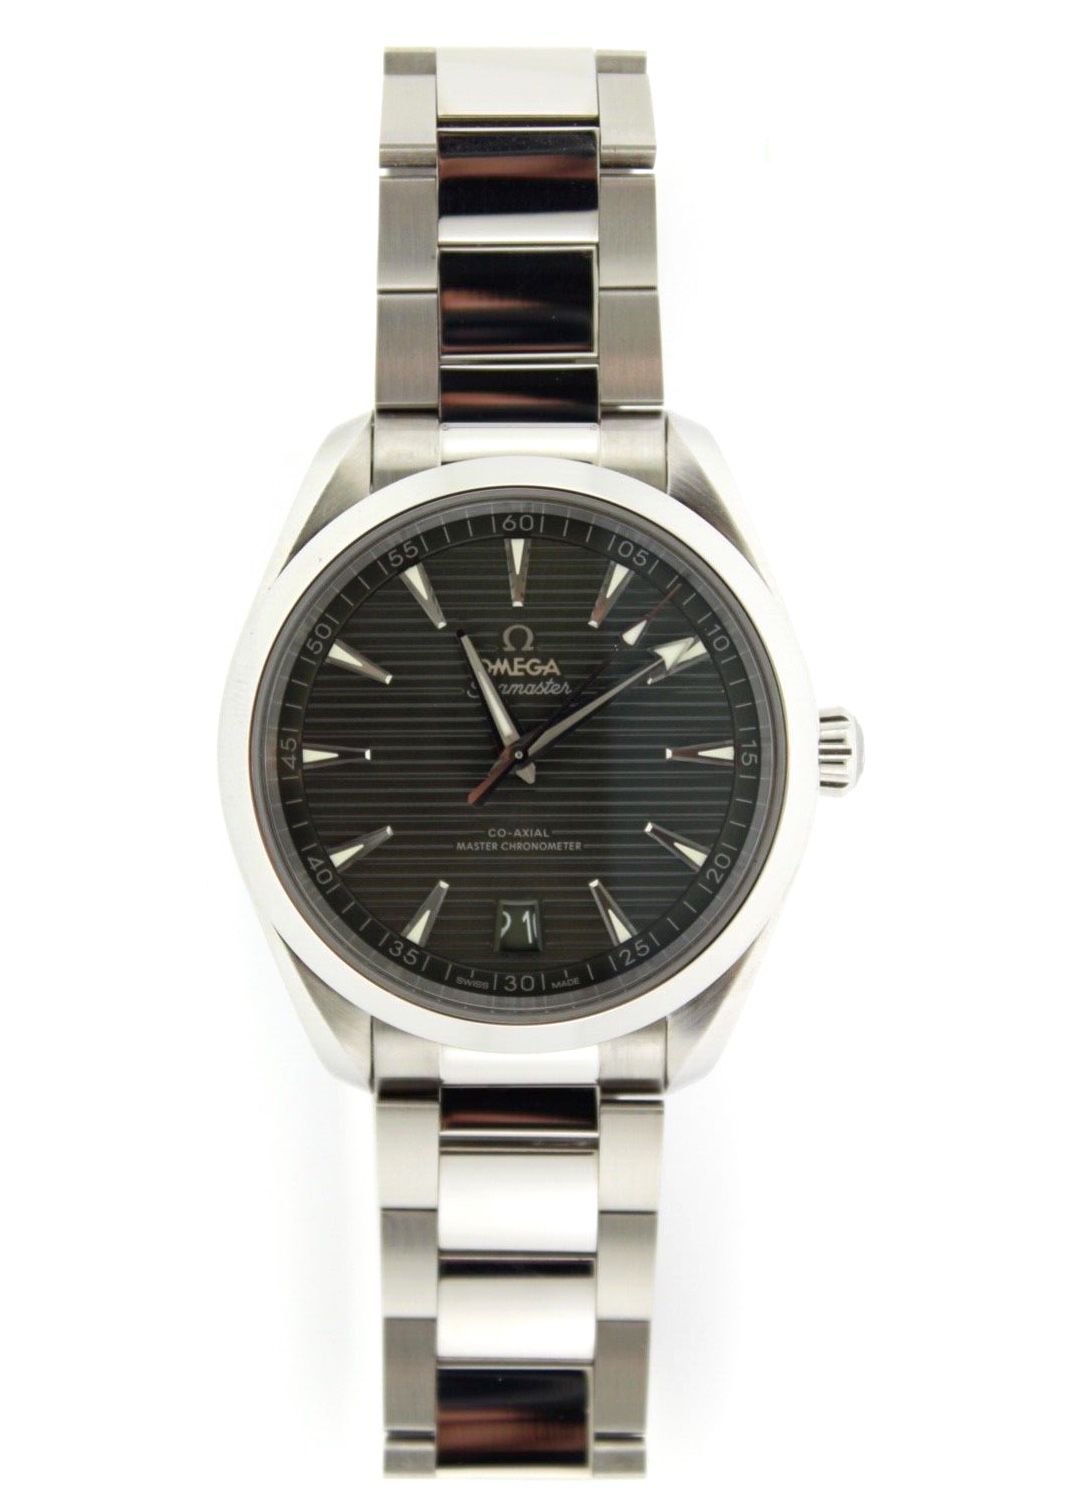 Omega master co-axial 8900 - Chronometer, Aqua Tera, Green Dial, Men's watch